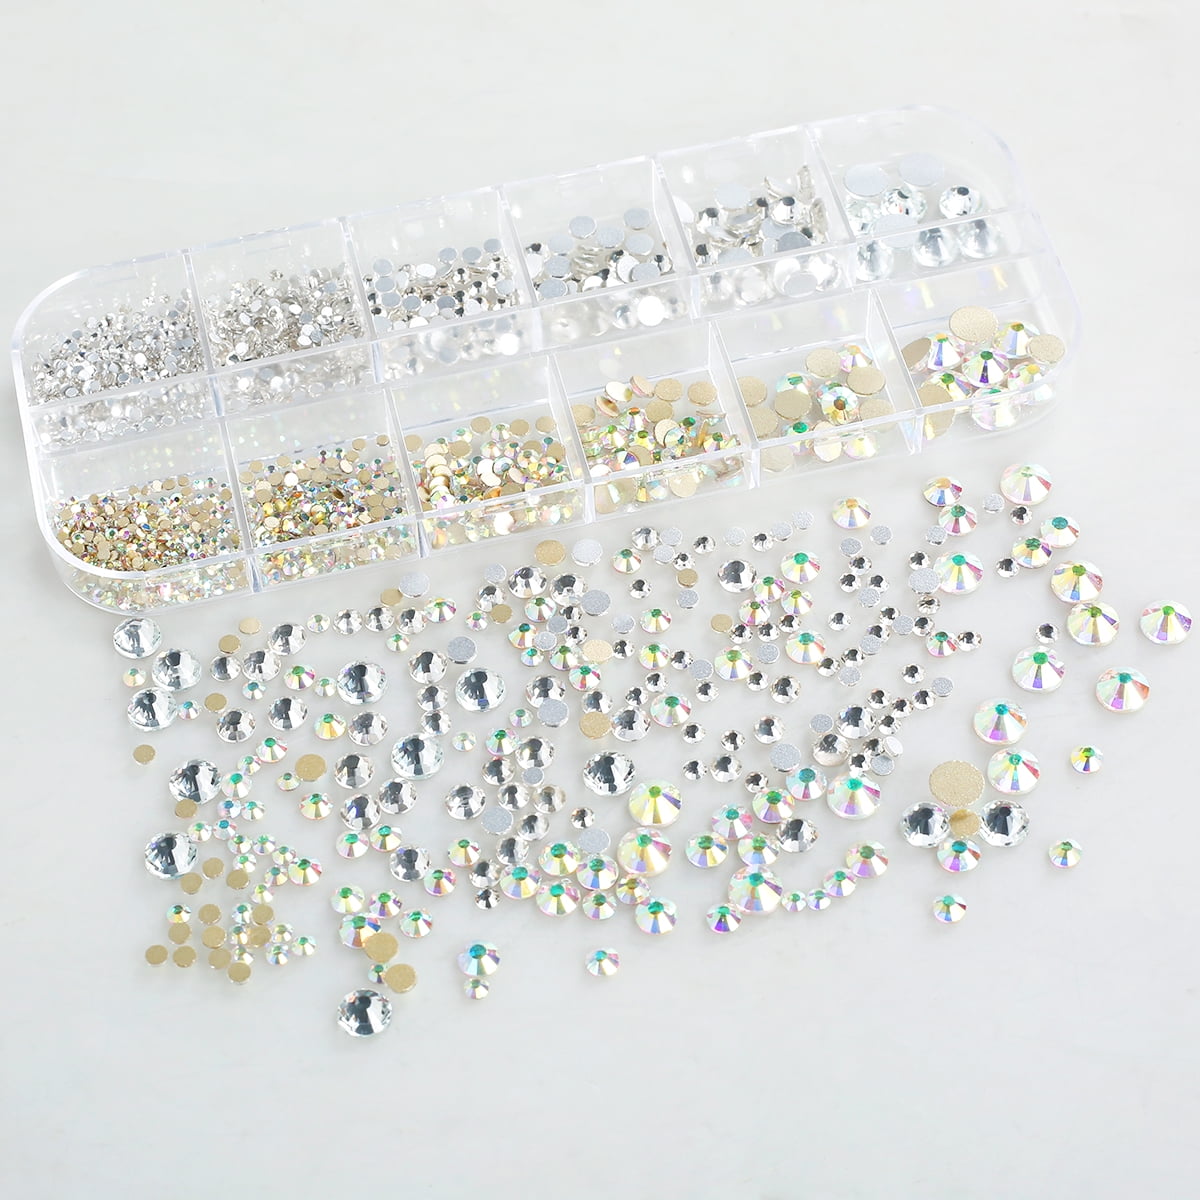 Summerkimy Nail Art Rhinestones Kit DIY Nail Crystal Gems Kit 2400pcs AB Nail Rhinestones Multiple Shapes Flatback Nail Charms Beads Decoration with